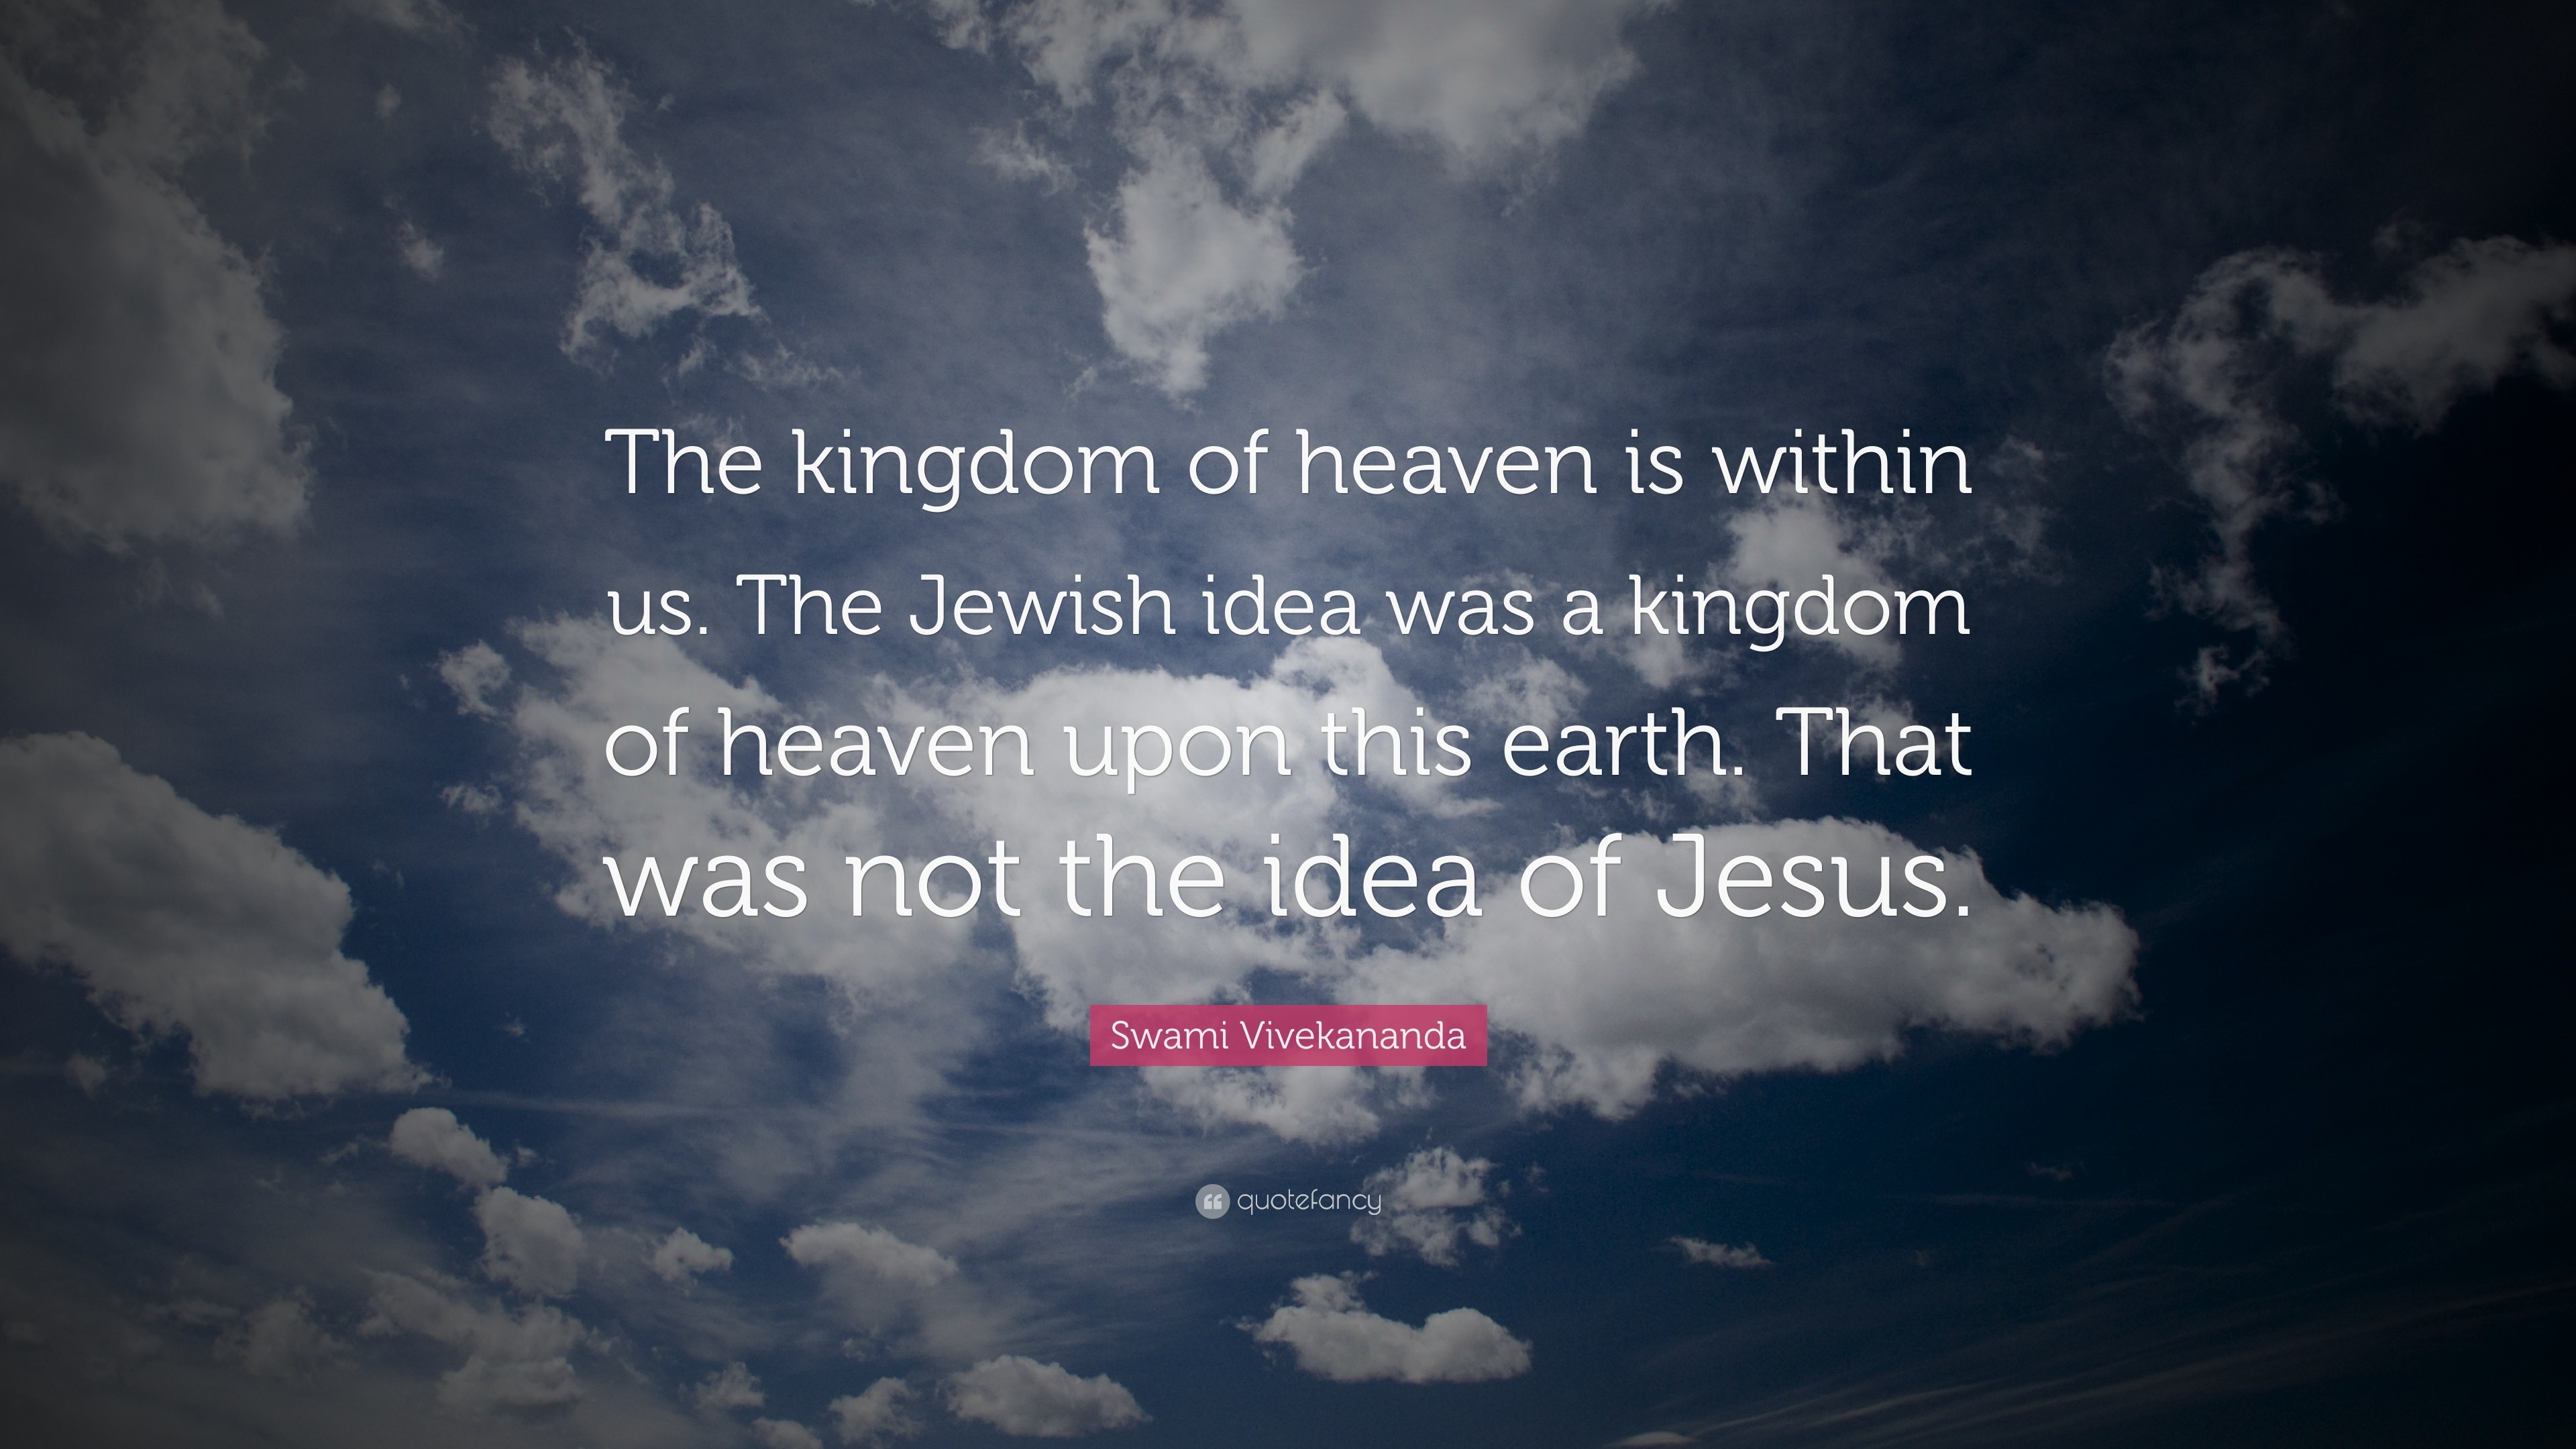 3840x2160 Swami Vivekananda Quote: “The kingdom of heaven is within us. The Jewish  idea